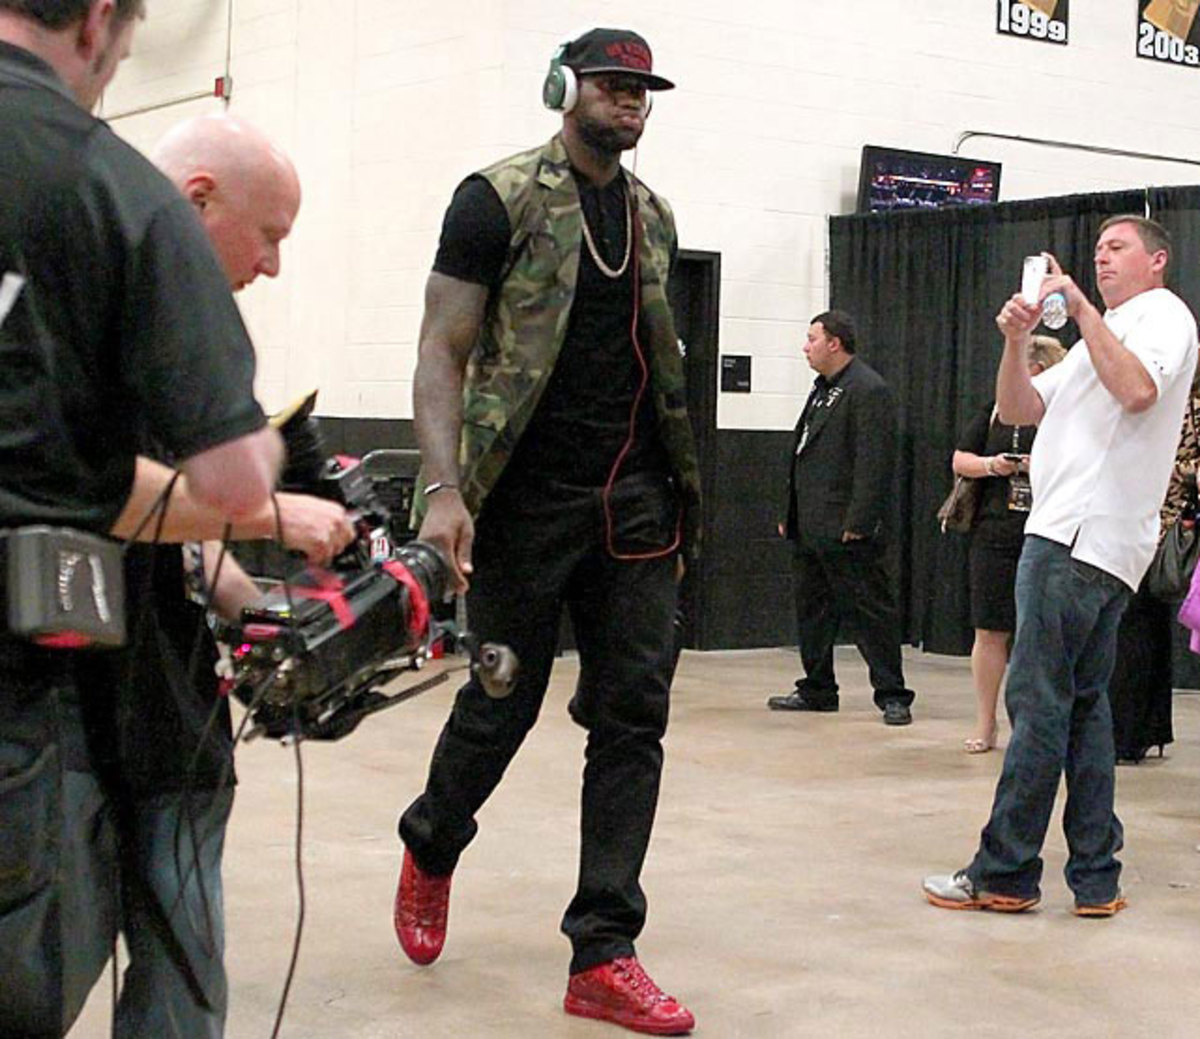 LeBron James NBA fashion, style photos, outfits - Sports Illustrated